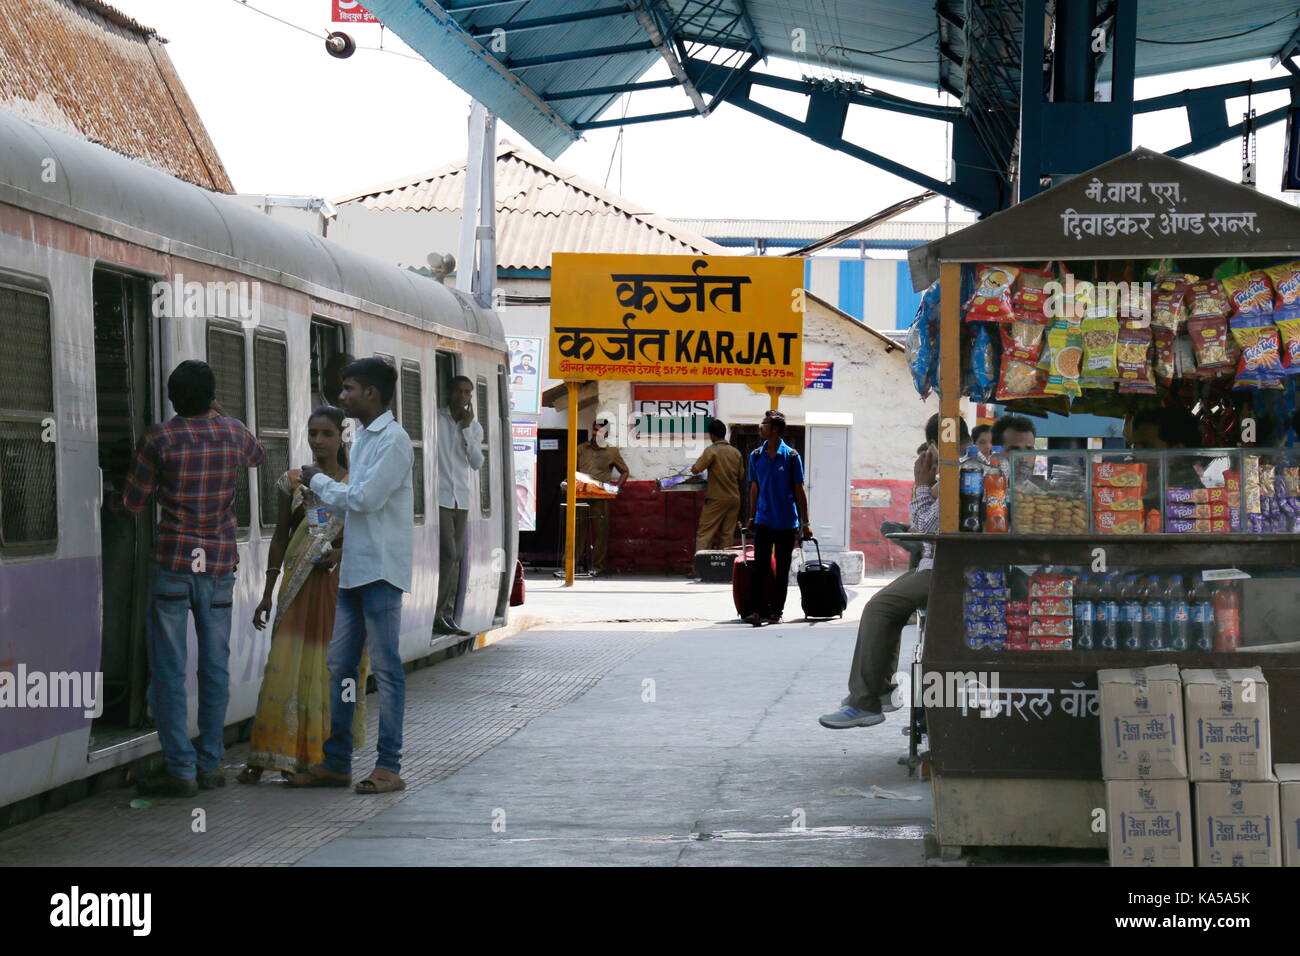 Karjat railway station, railway platform stall, sign board in English, Hindi, Marathi, Thane, Maharashtra, India, Asia Stock Photo